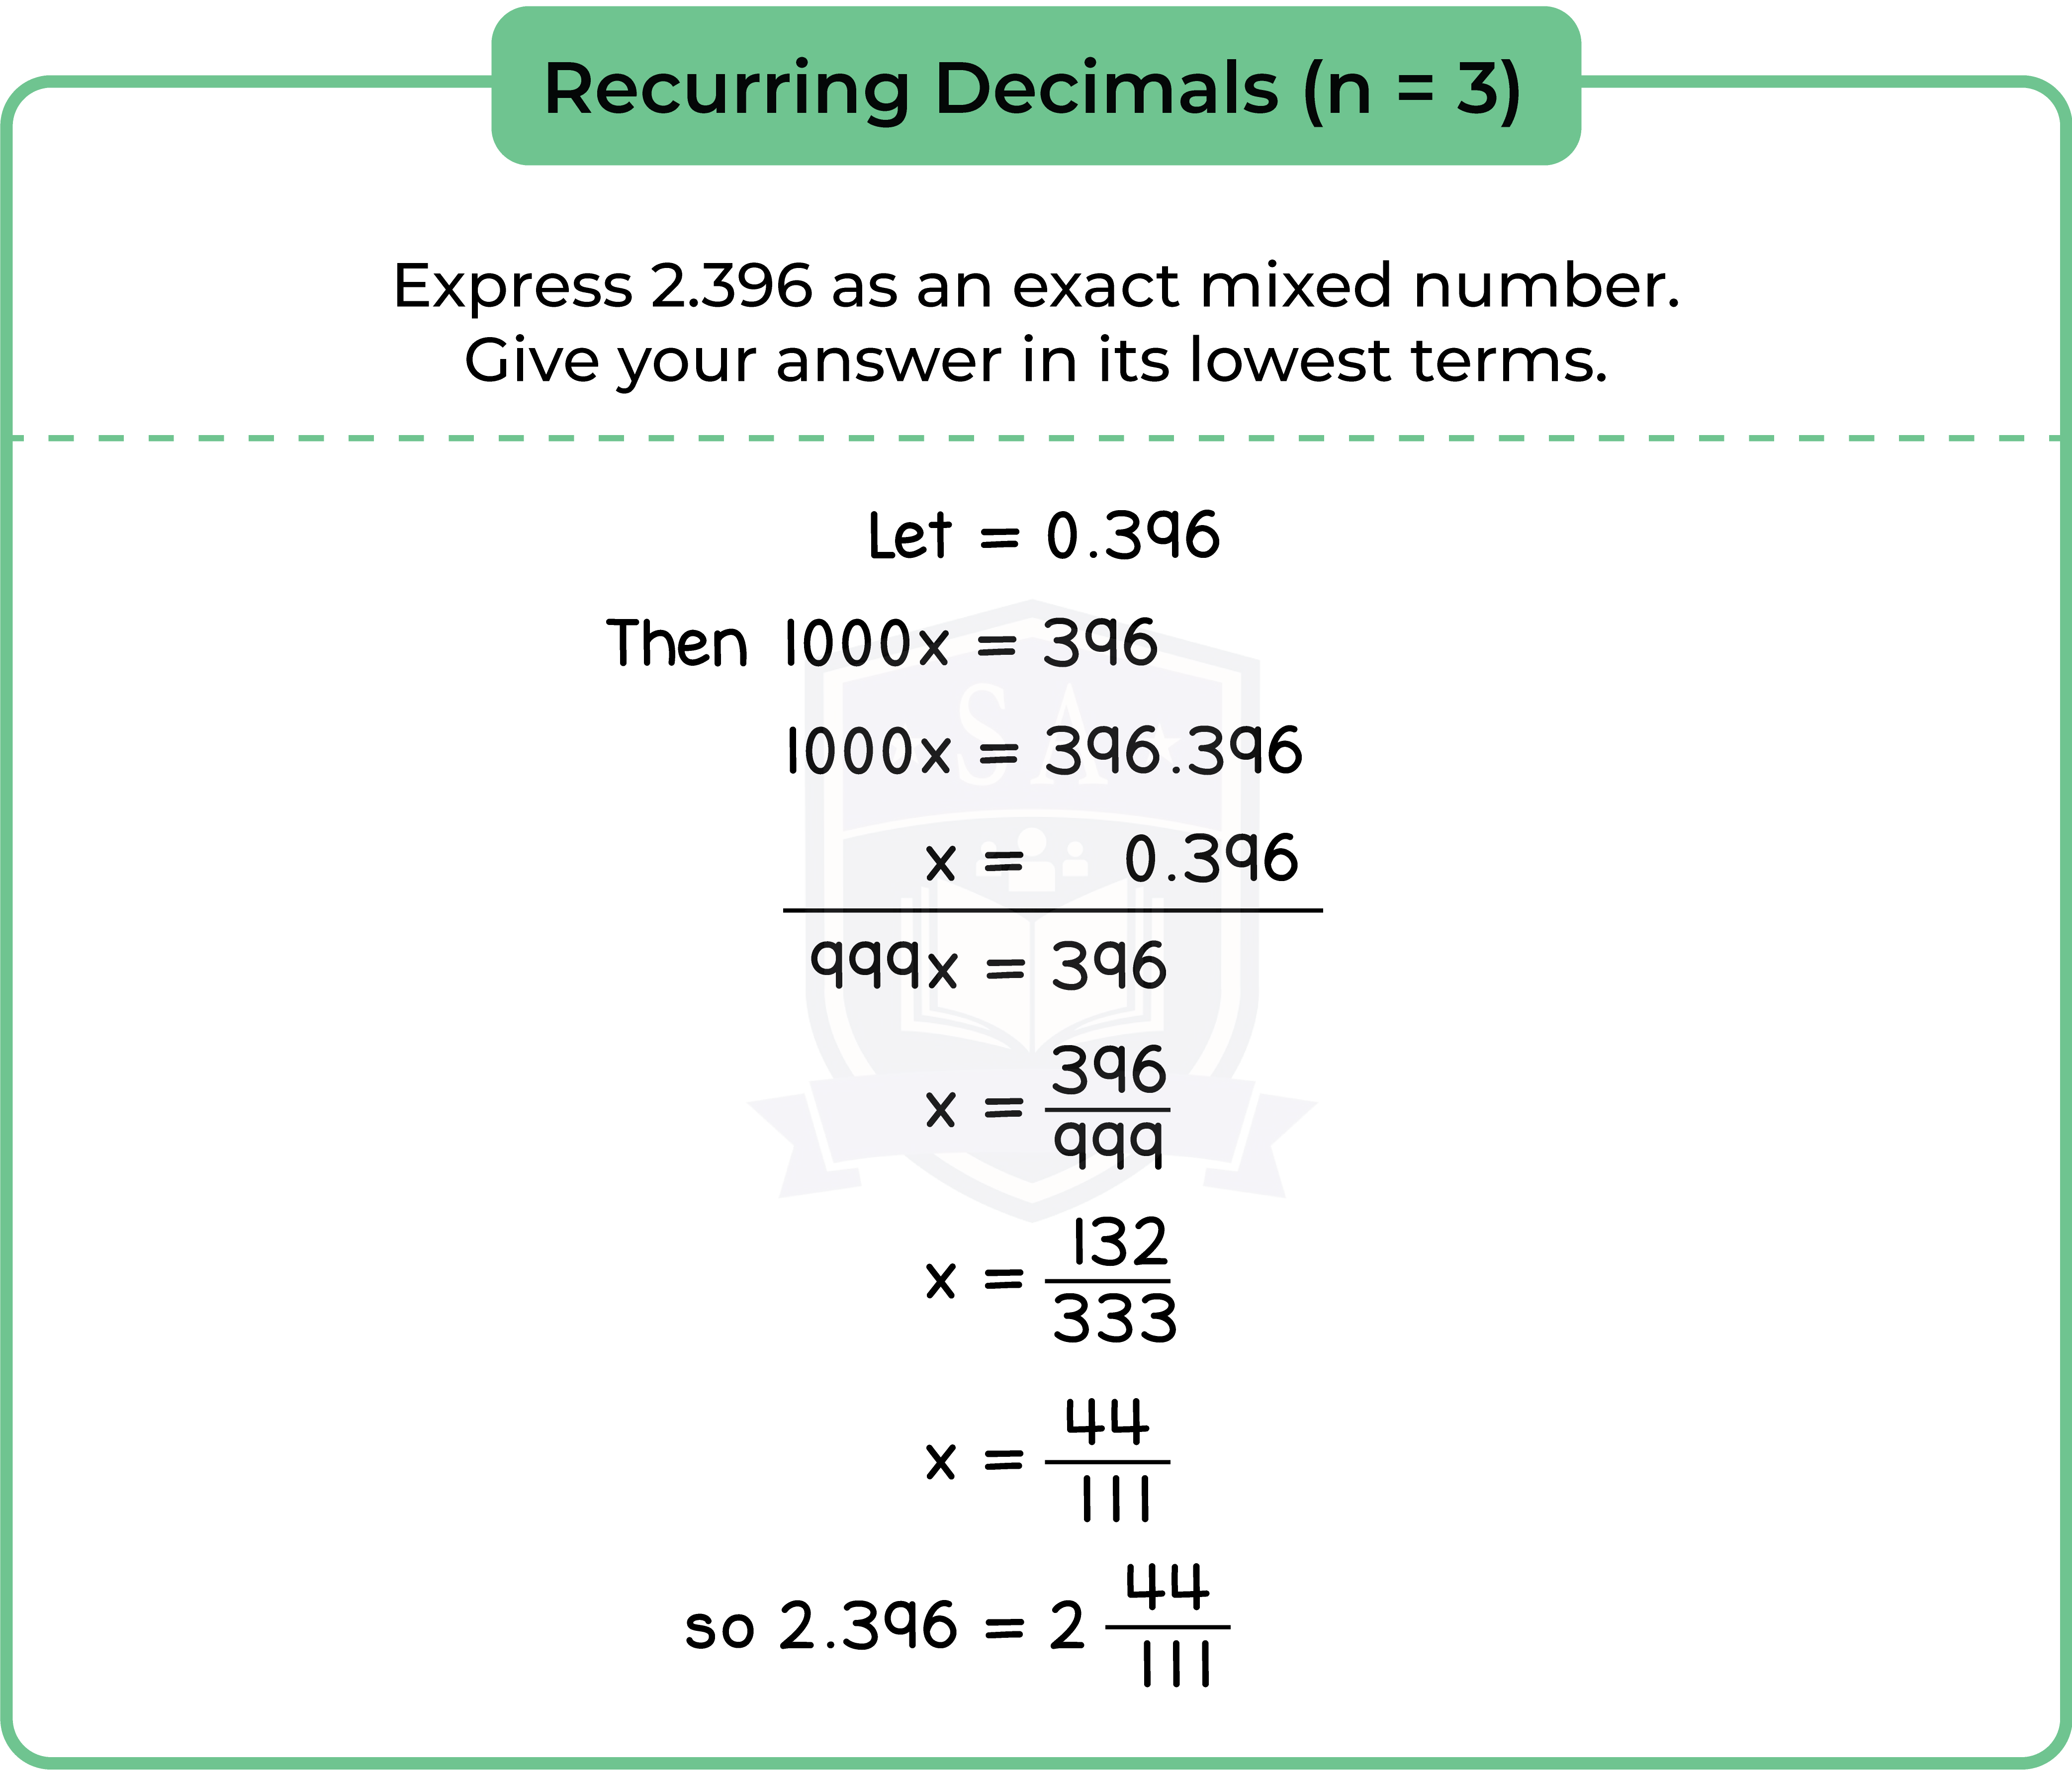 edexcel_igcse_mathematics a_topic 03_decimals_003_recurring decimals